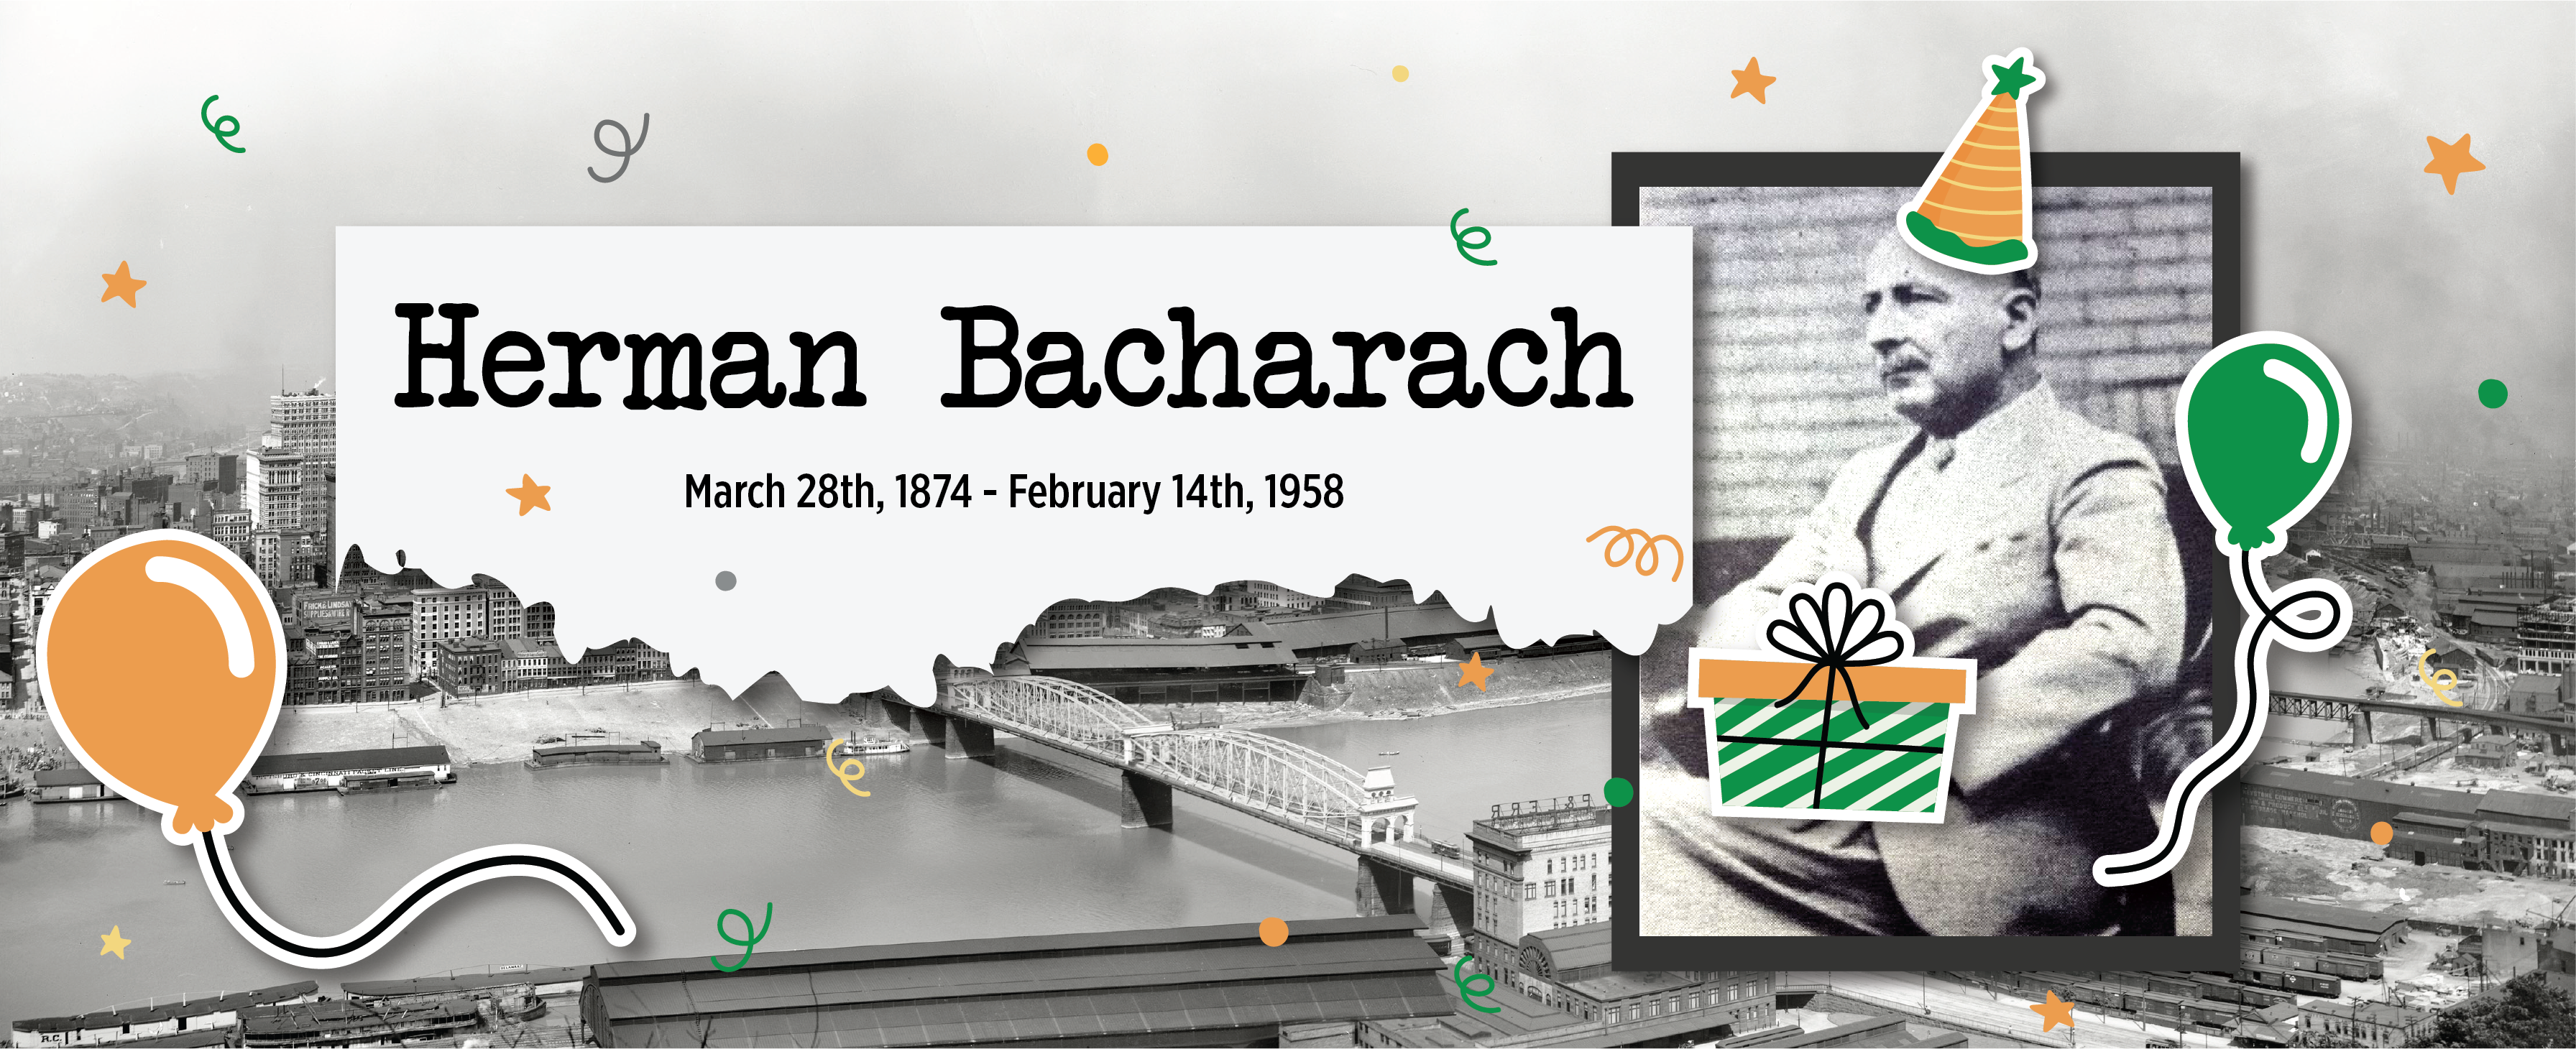 Bacharach รูปภาพบล็อกวันเกิดปี 2022 02